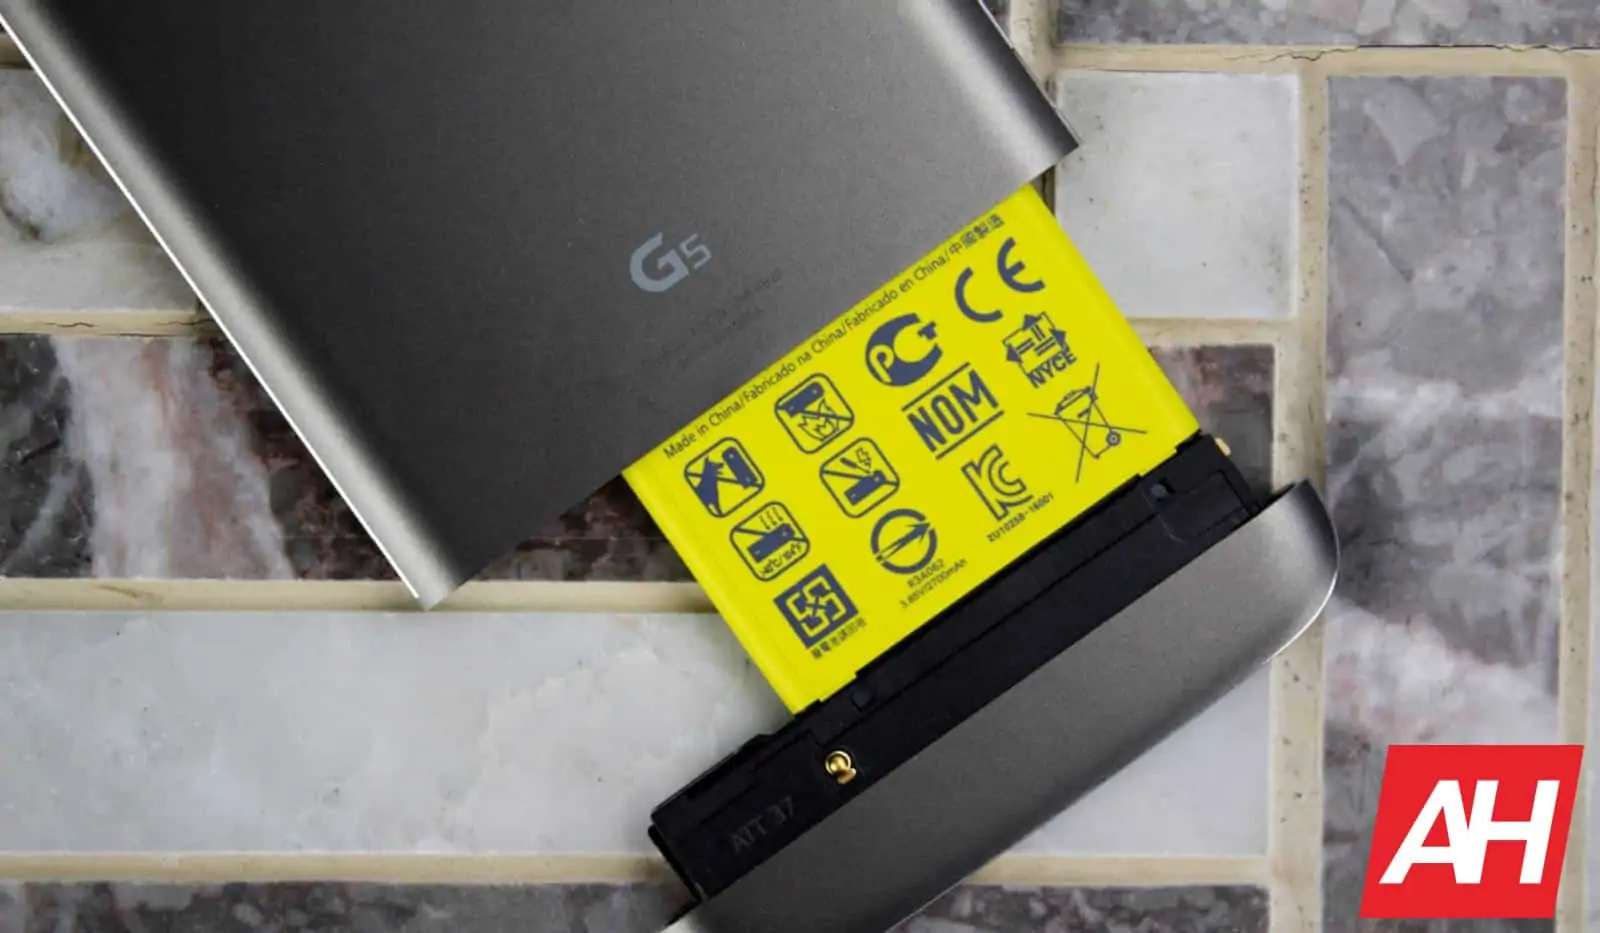 LG G5 AH New Watermark